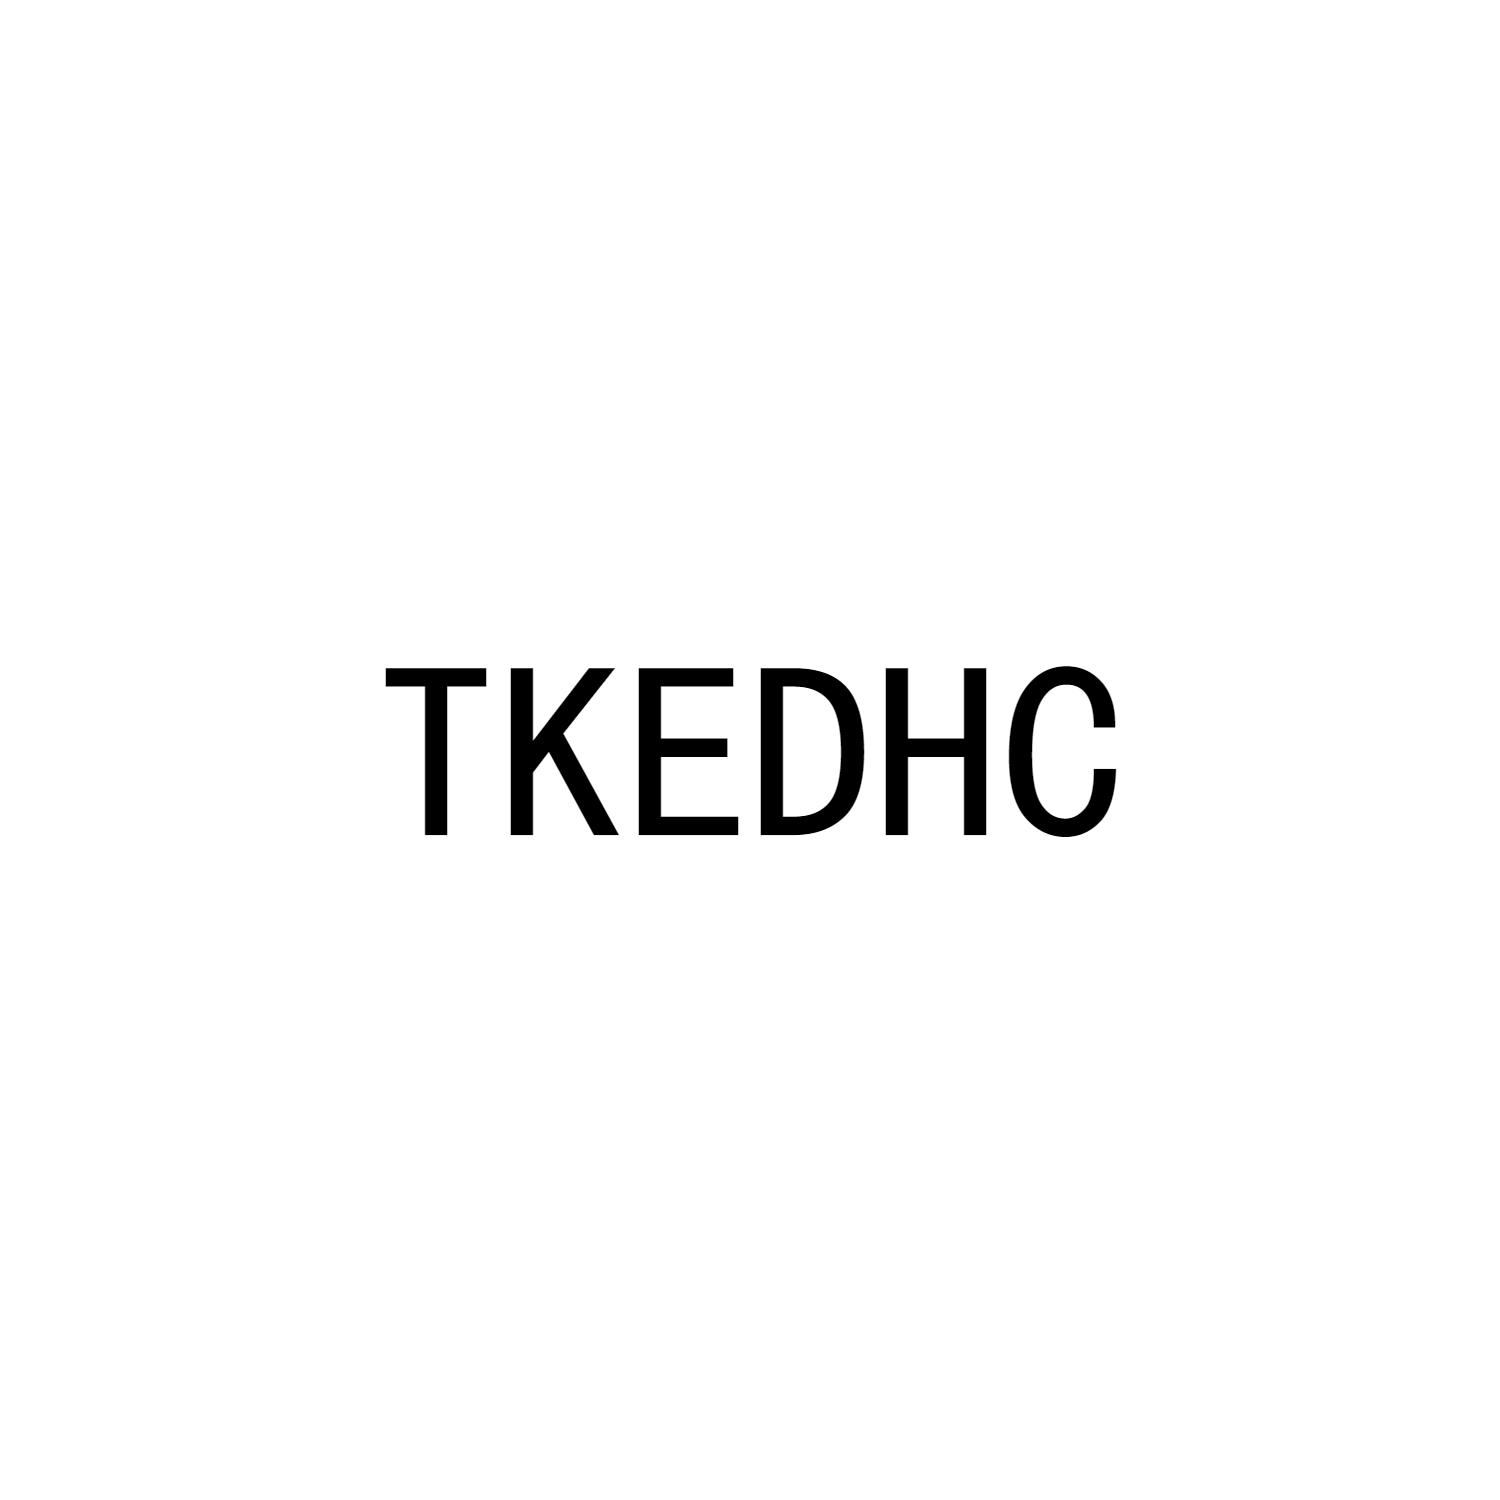 TKEDHC